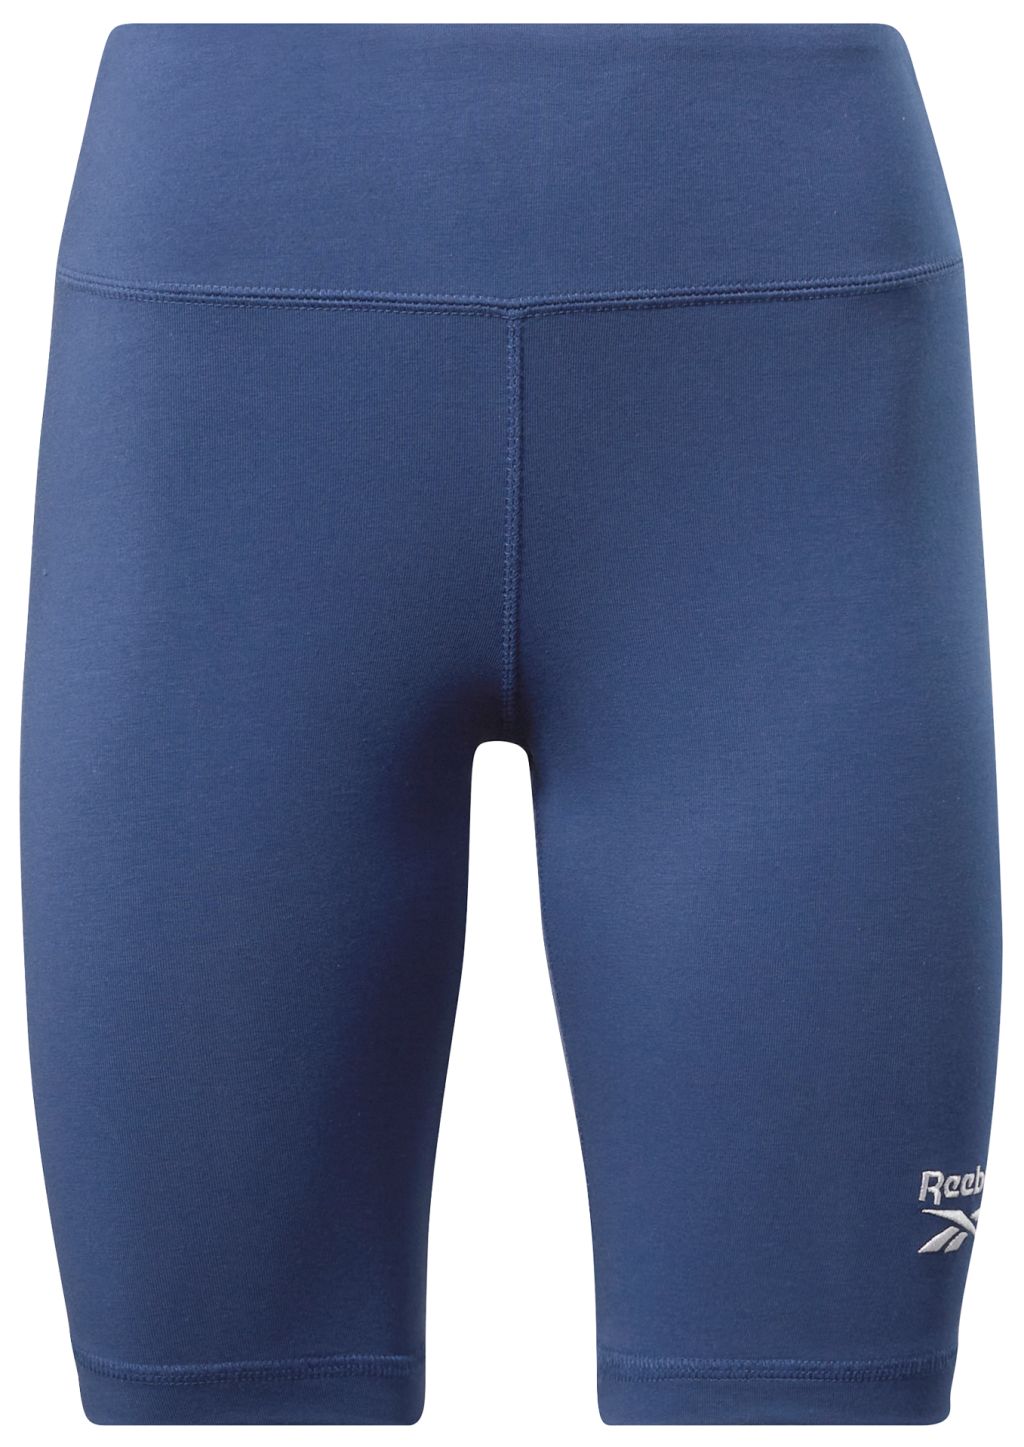 Women's shorts Reebok RI SL Fitted Short - batik blue | Tennis Zone |  Tennis Shop